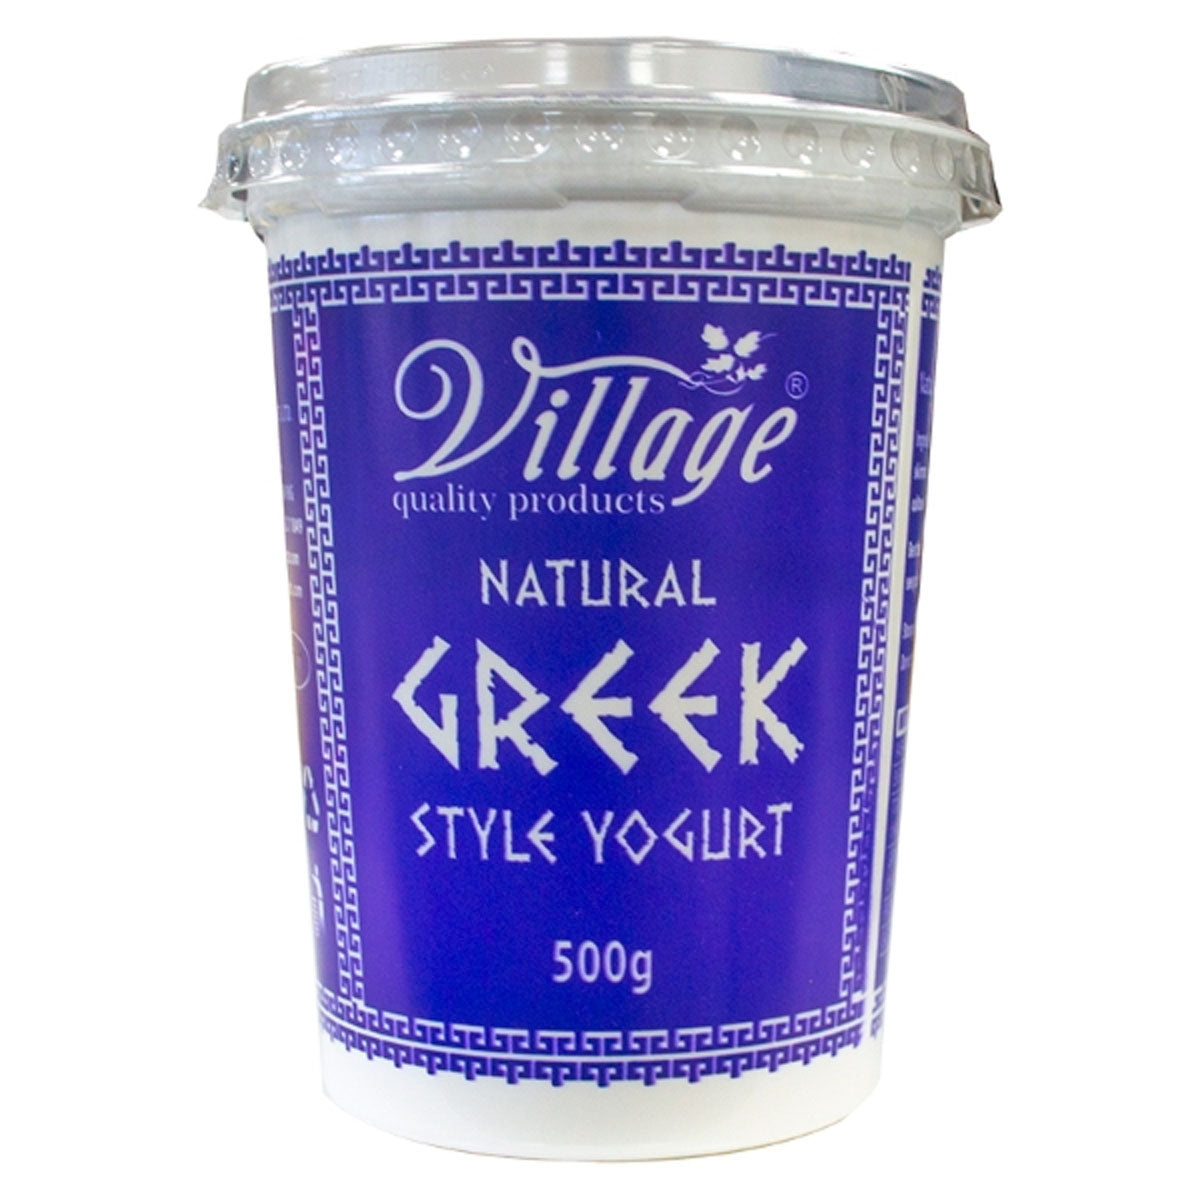 Village - Greek Yoghurt - 500g - Continental Food Store